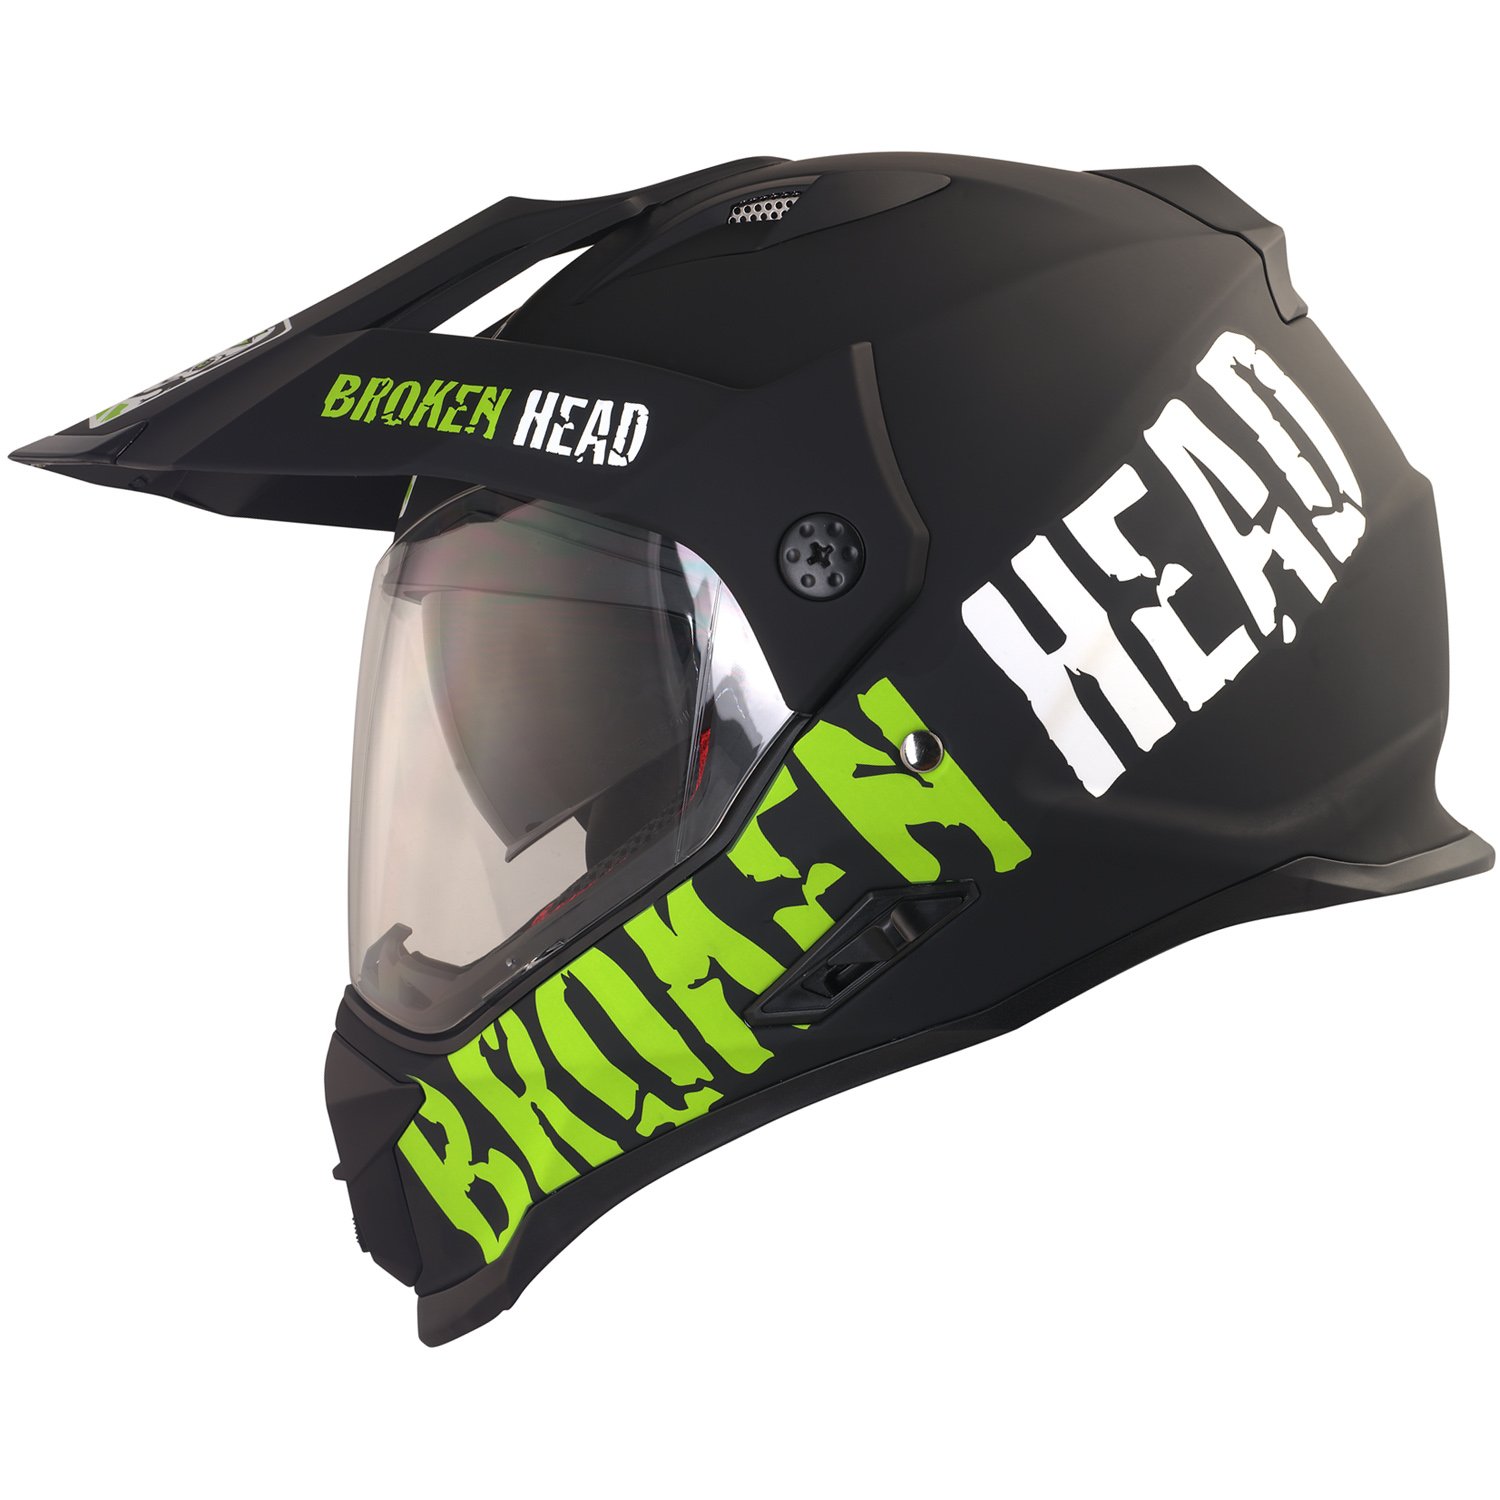 Broken Head made2rebel Motocross-Helm grün mit Visier - Enduro-Helm - MX Cross-Helm mit Sonnenblende - Quad-Helm (L 59-60 cm)